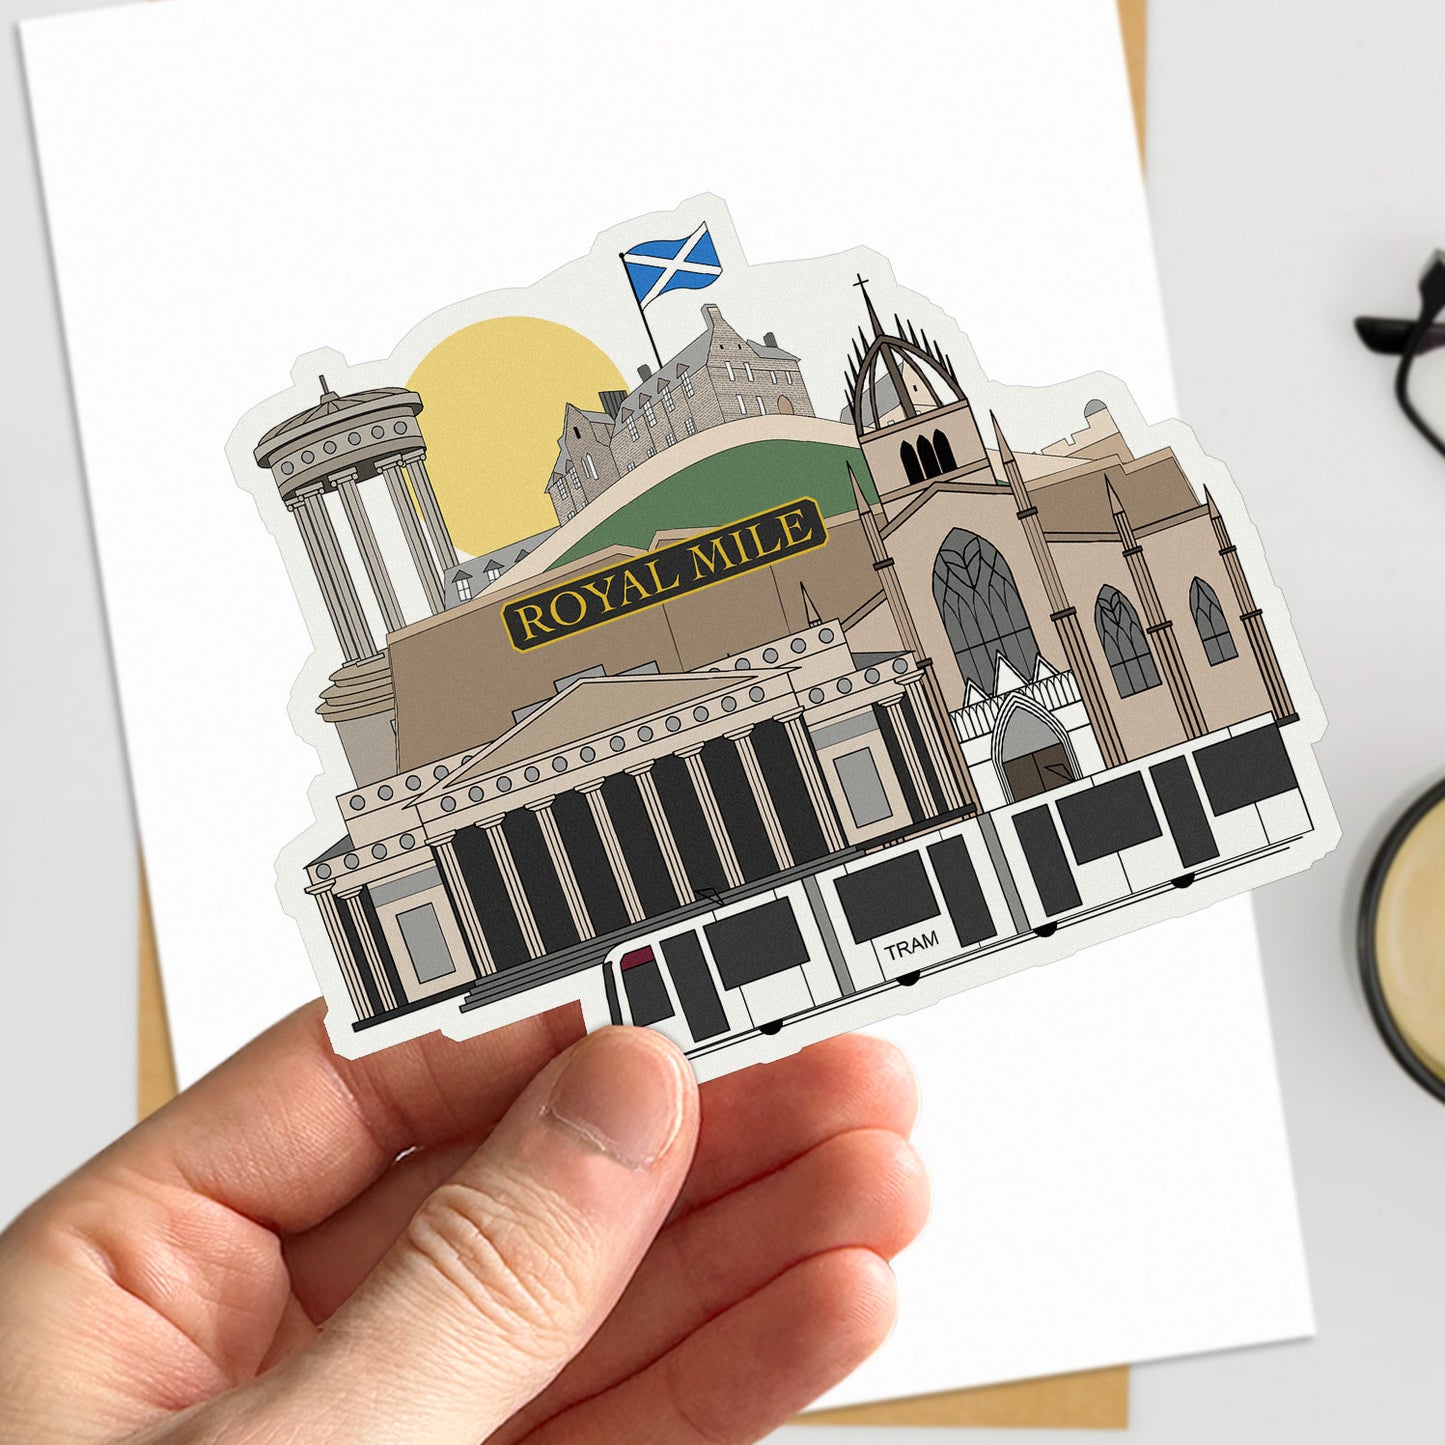 Edinburgh Travel Stickers